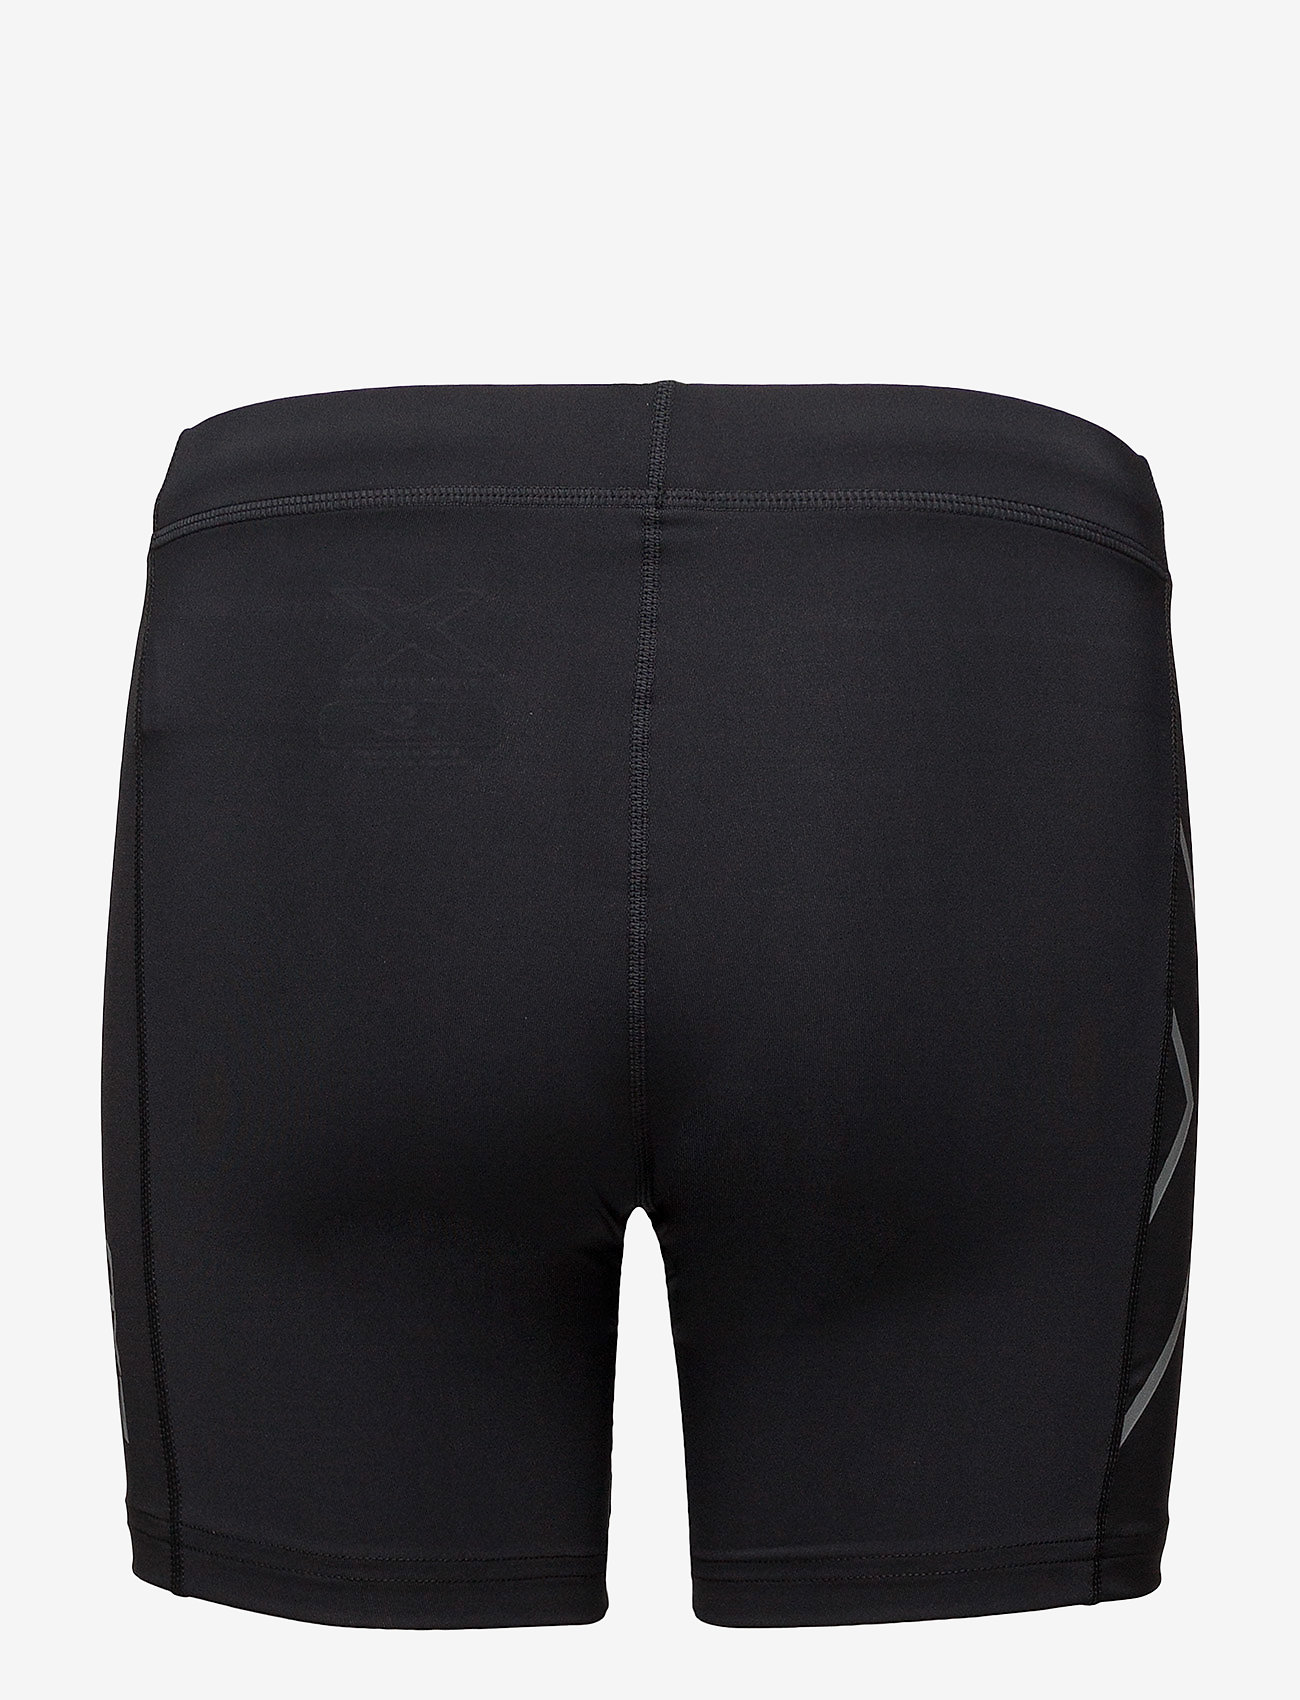 2XU - CORE COMP 5 INCH SHORTS - sports shorts - black/silver - 1